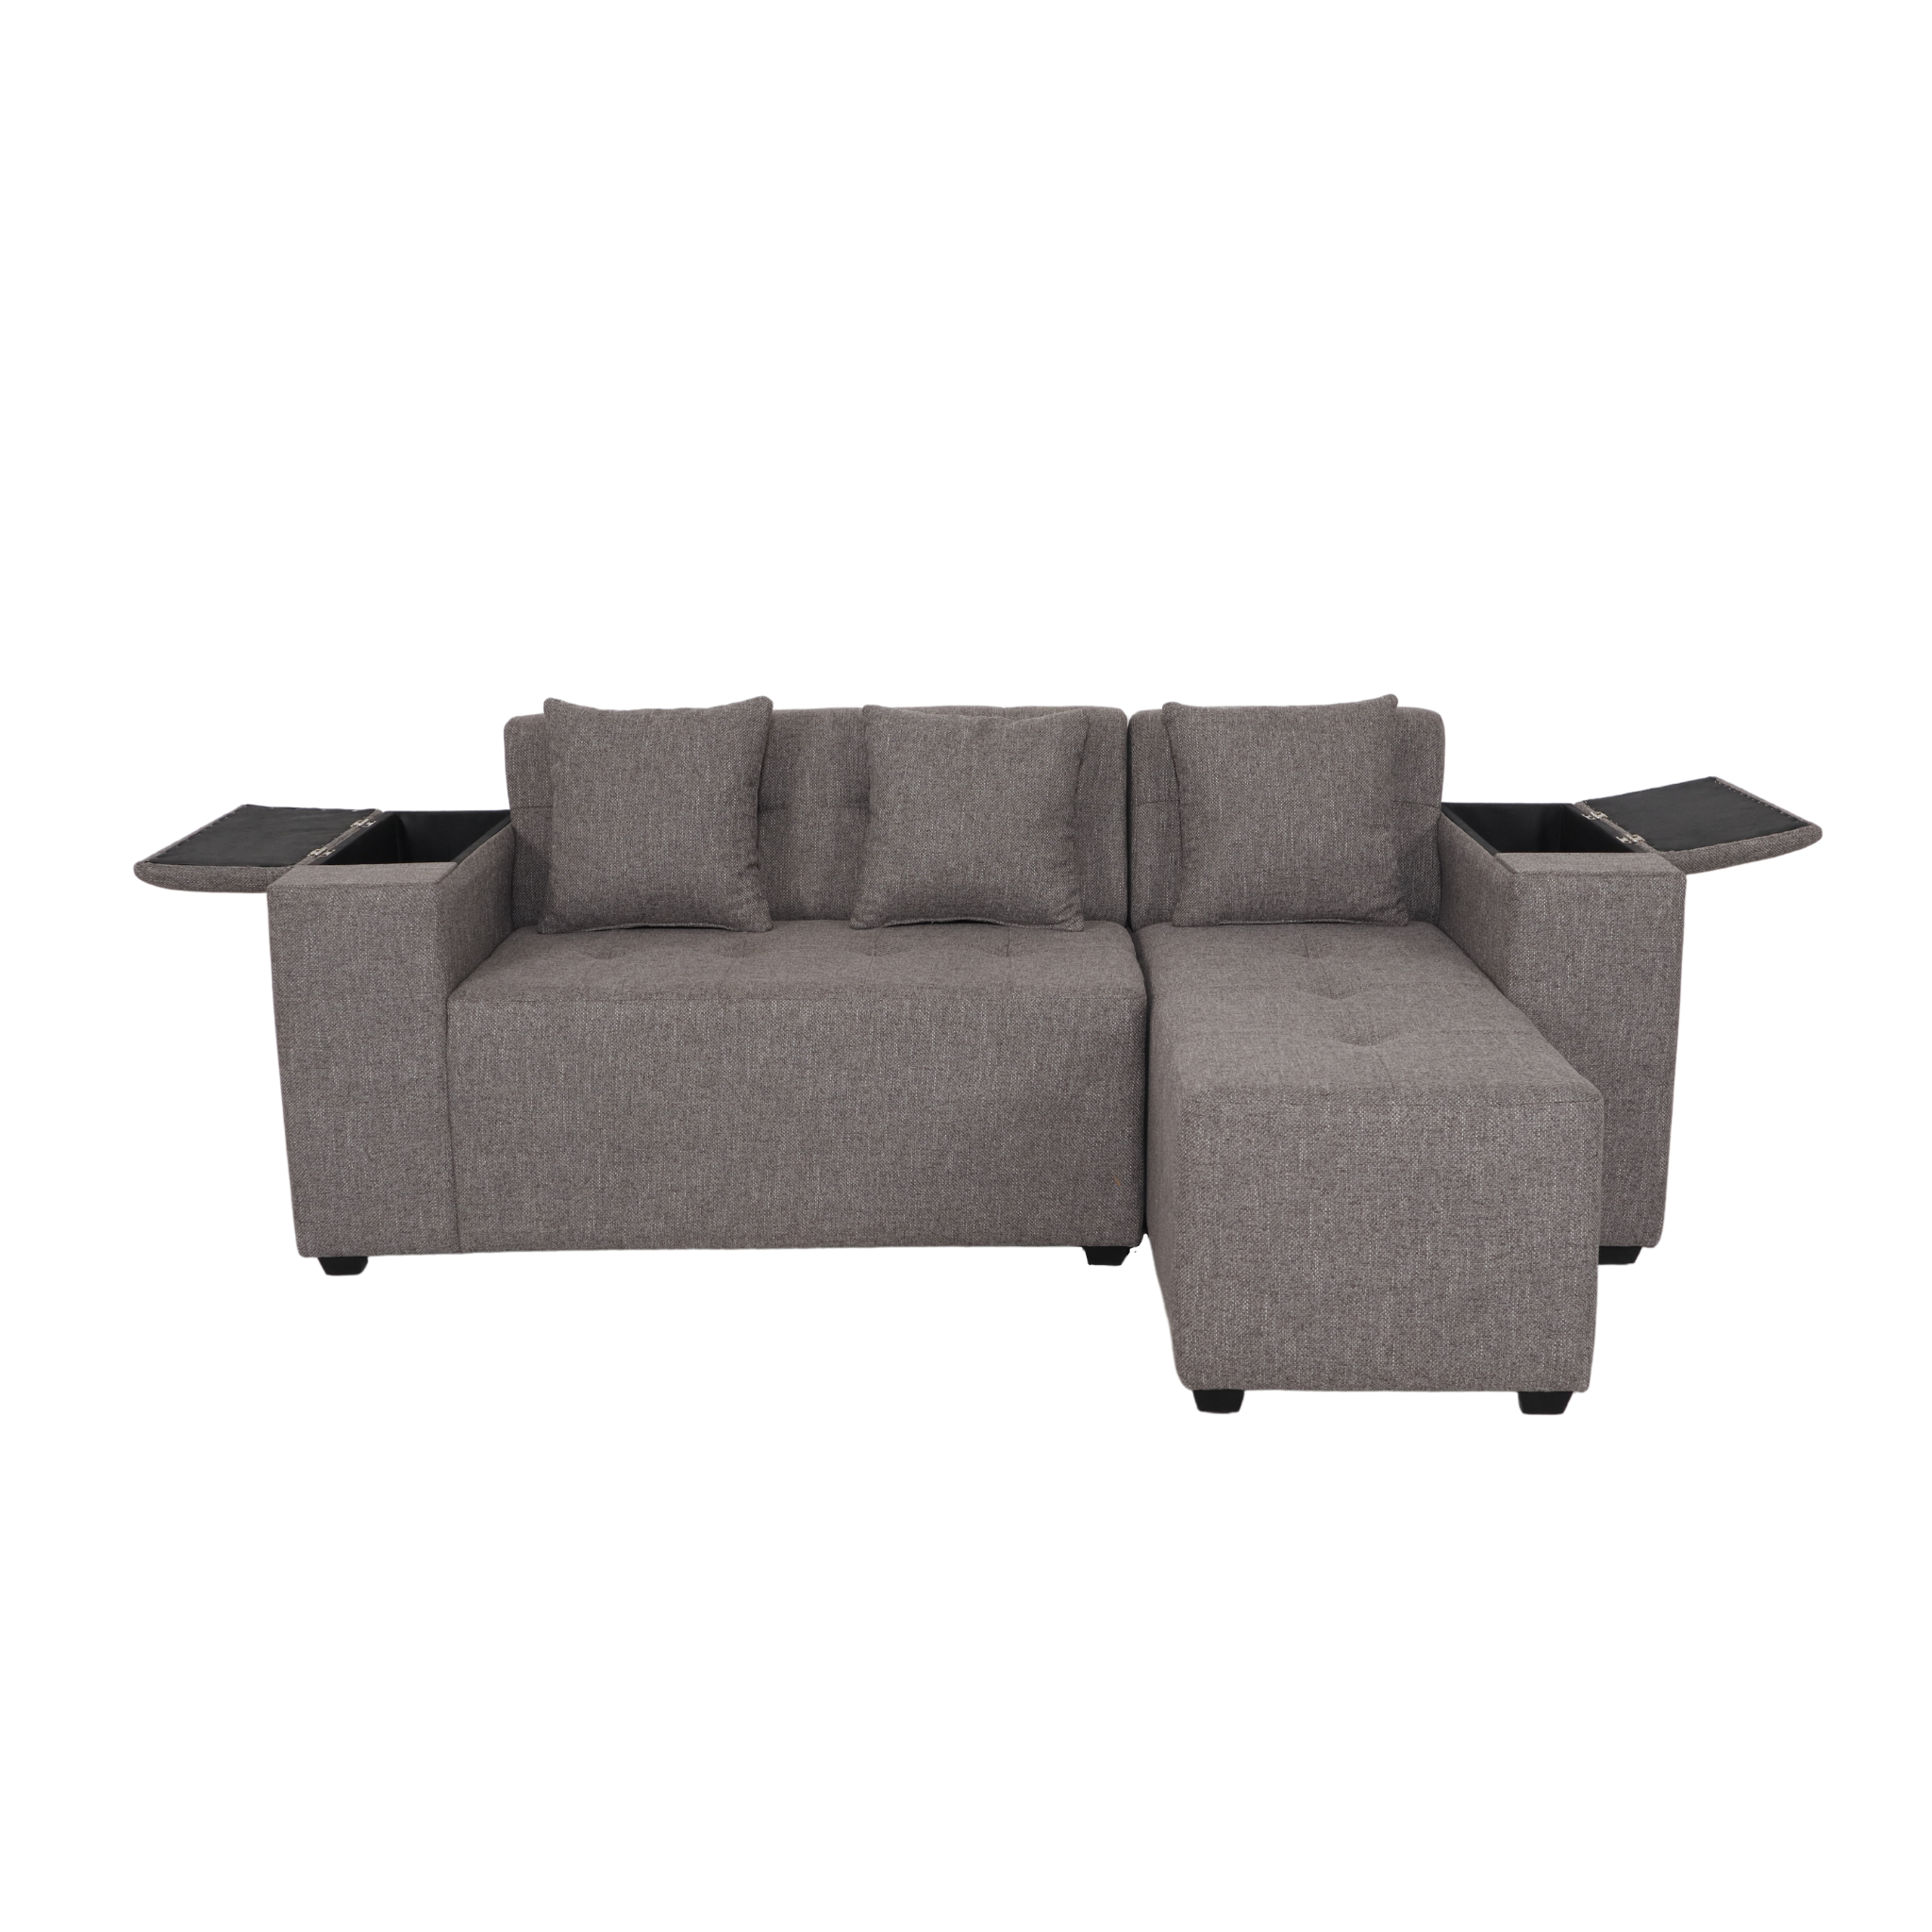 MASON Fabric Sofa with Armrest Storage AF Home